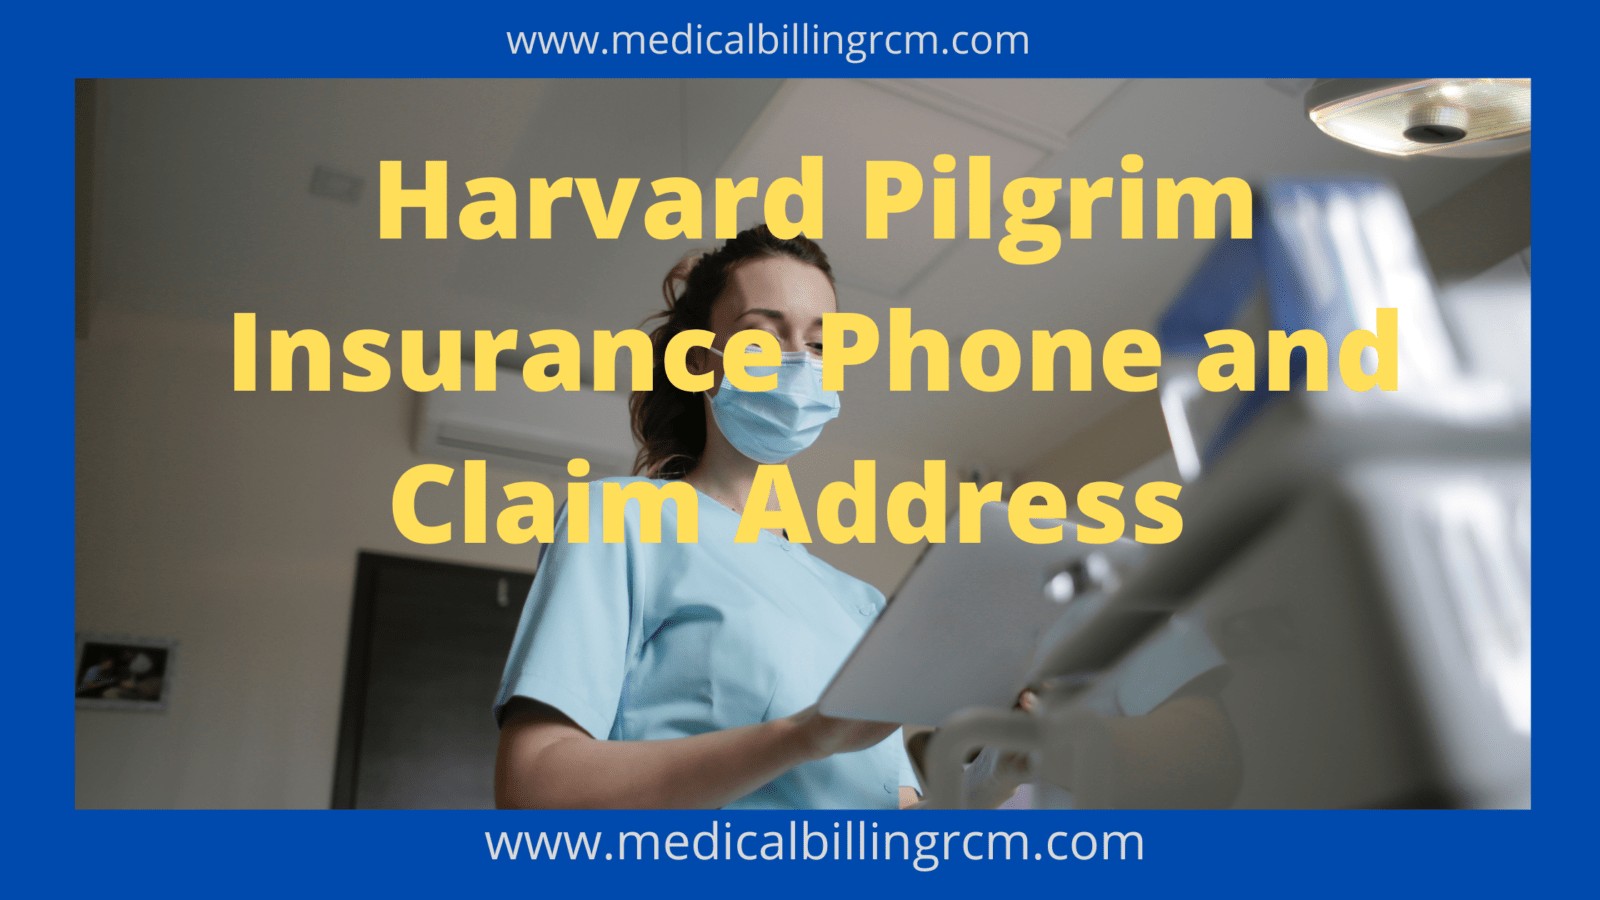 harvard pilgrim insurance phone number and claim address